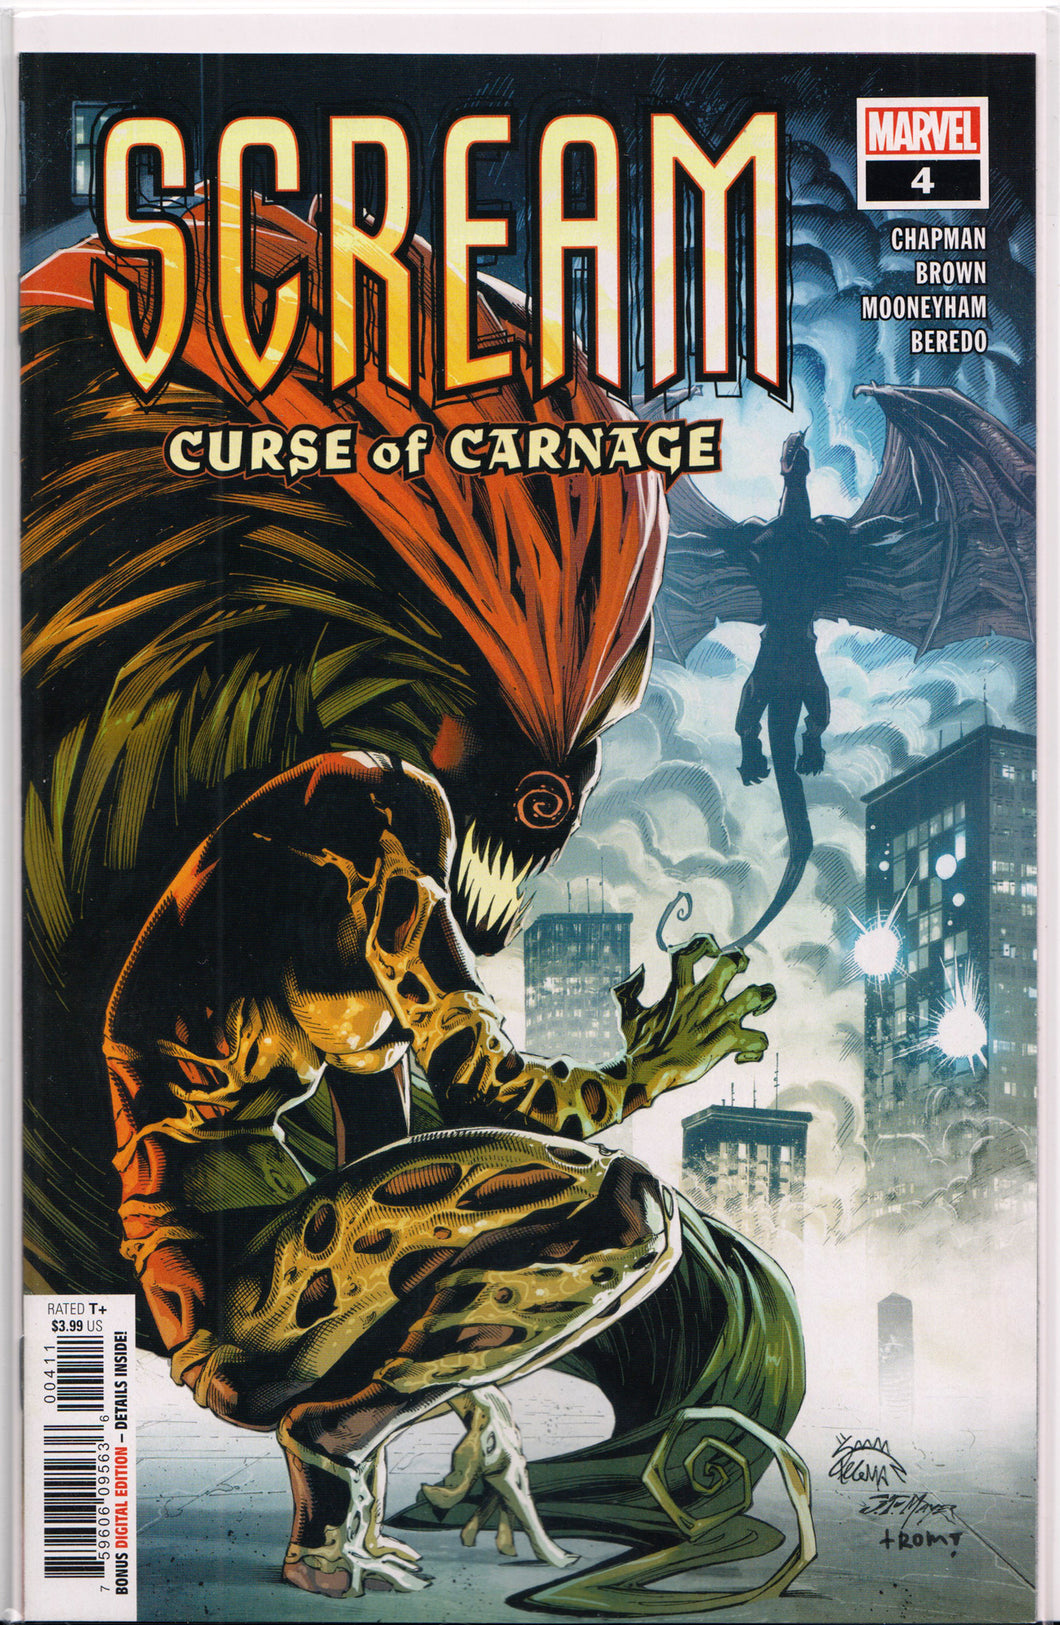 SCREAM: CURSE OF CARNAGE #4 (1ST PRINT) COMIC BOOK ~ Marvel Comics